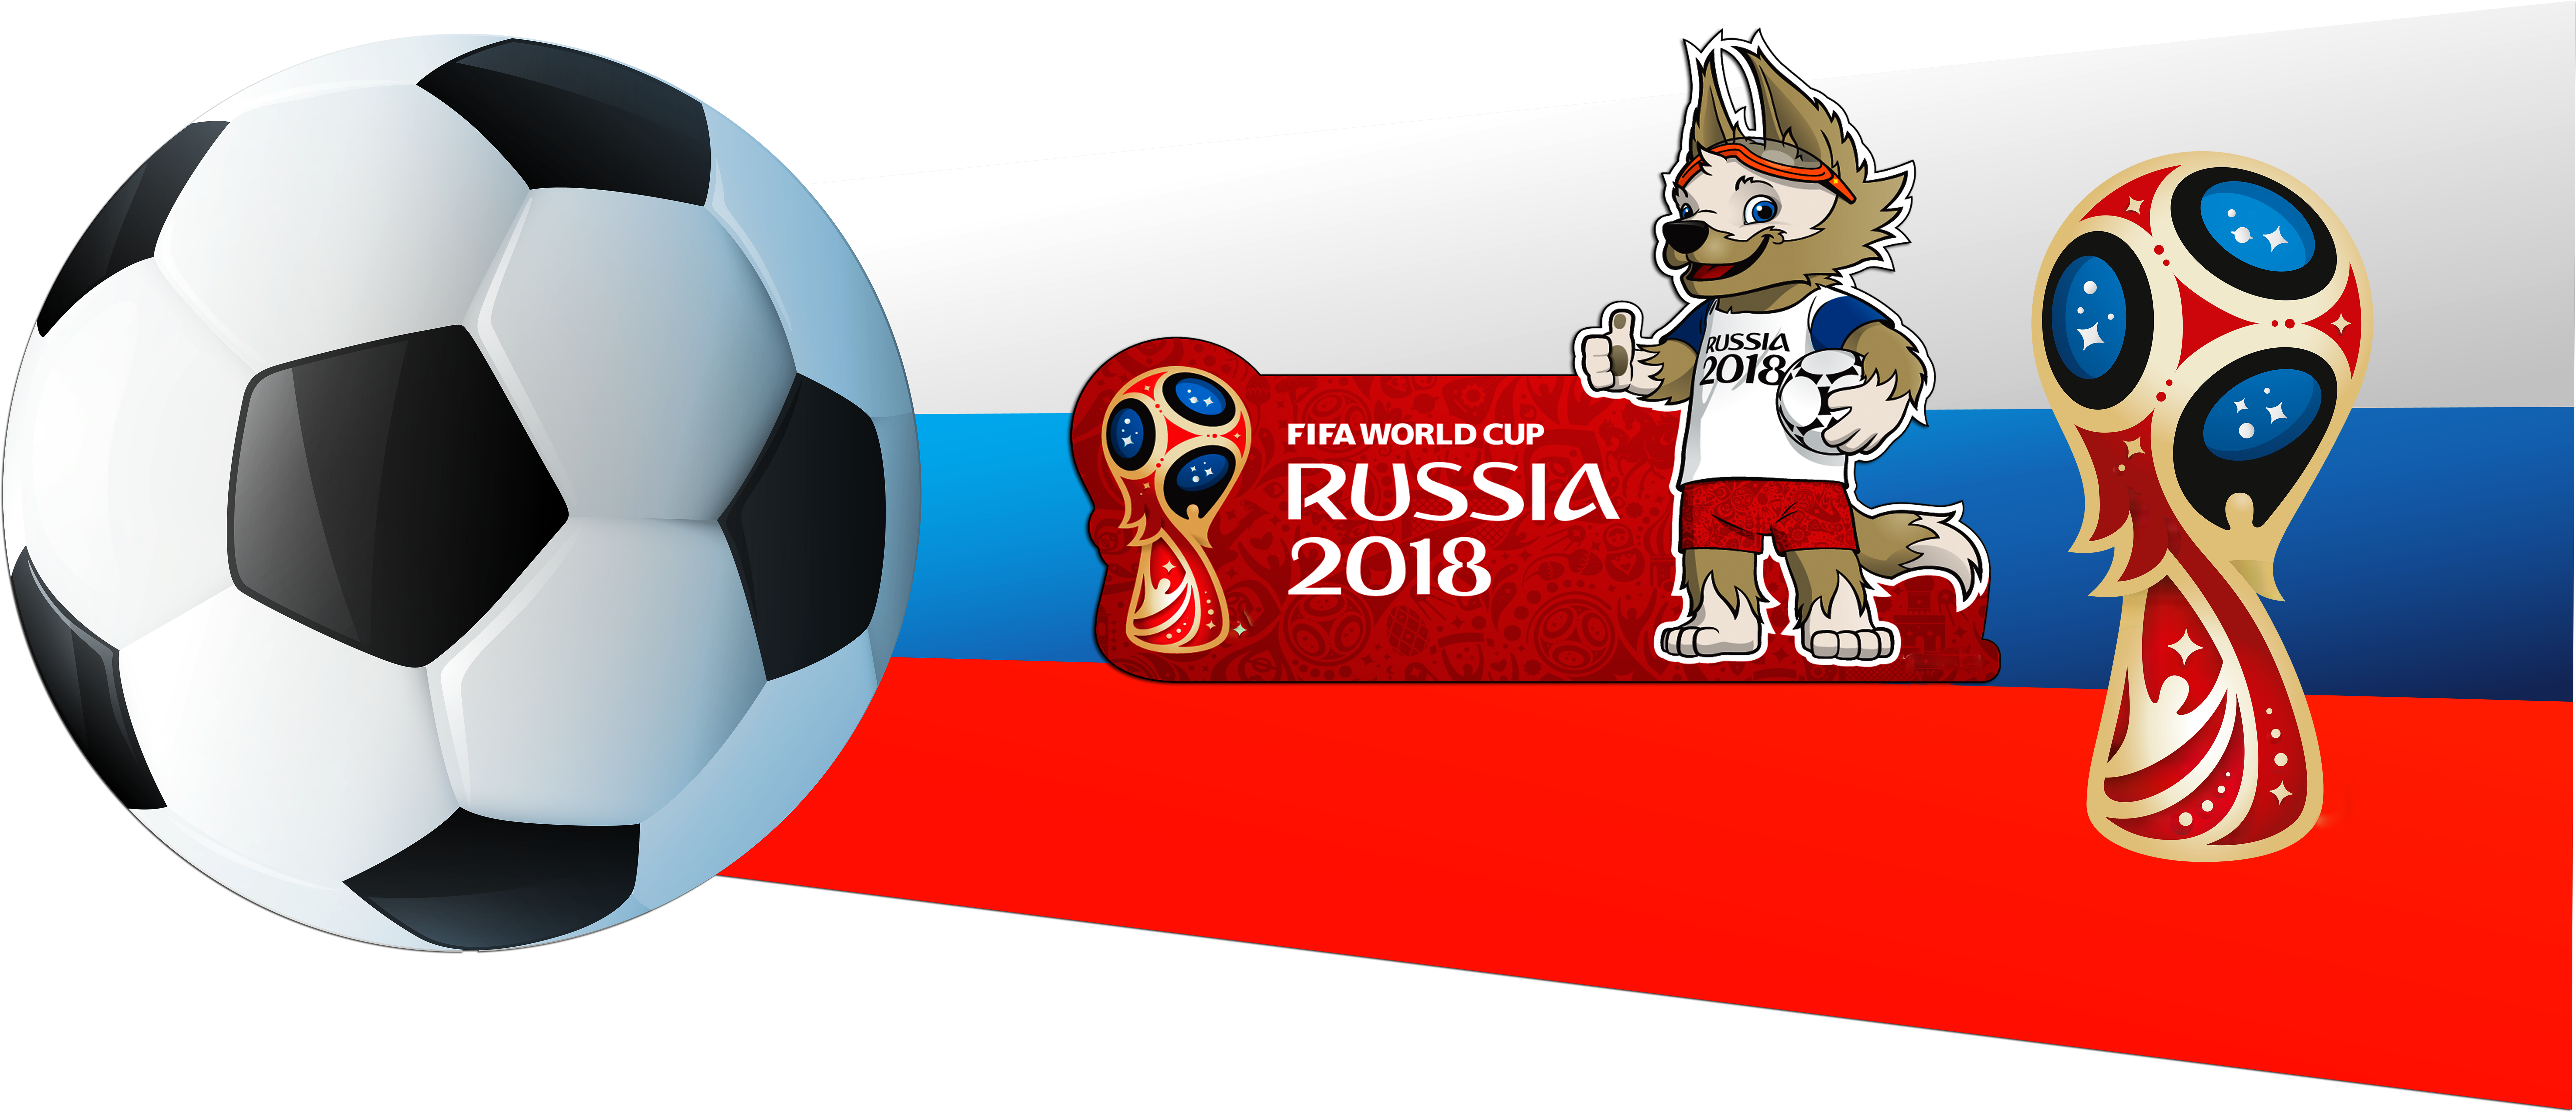 2018 Fifa World Cup 2014 Fifa World Cup Russia Football - 2018 Fifa World Cup (8000x3604)